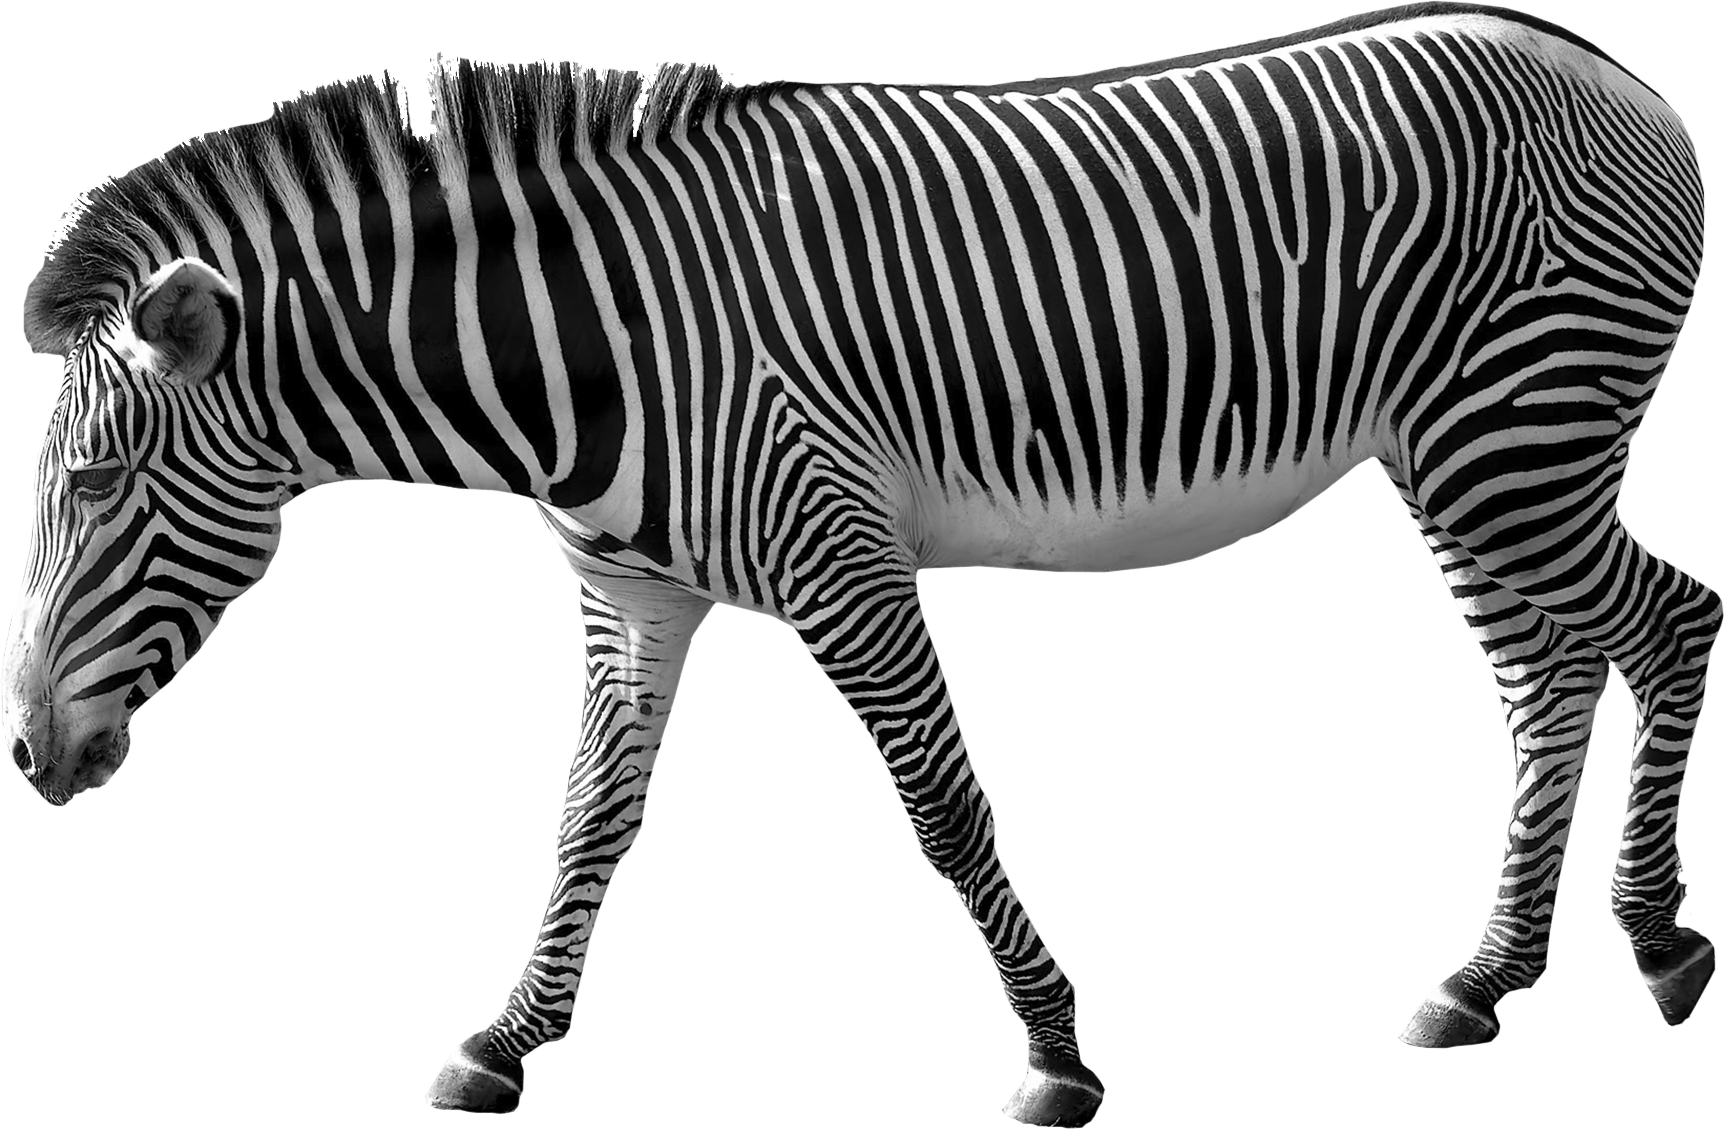 Zebra Clip art - Zebra PNG image png download - 1725*1130 - Free